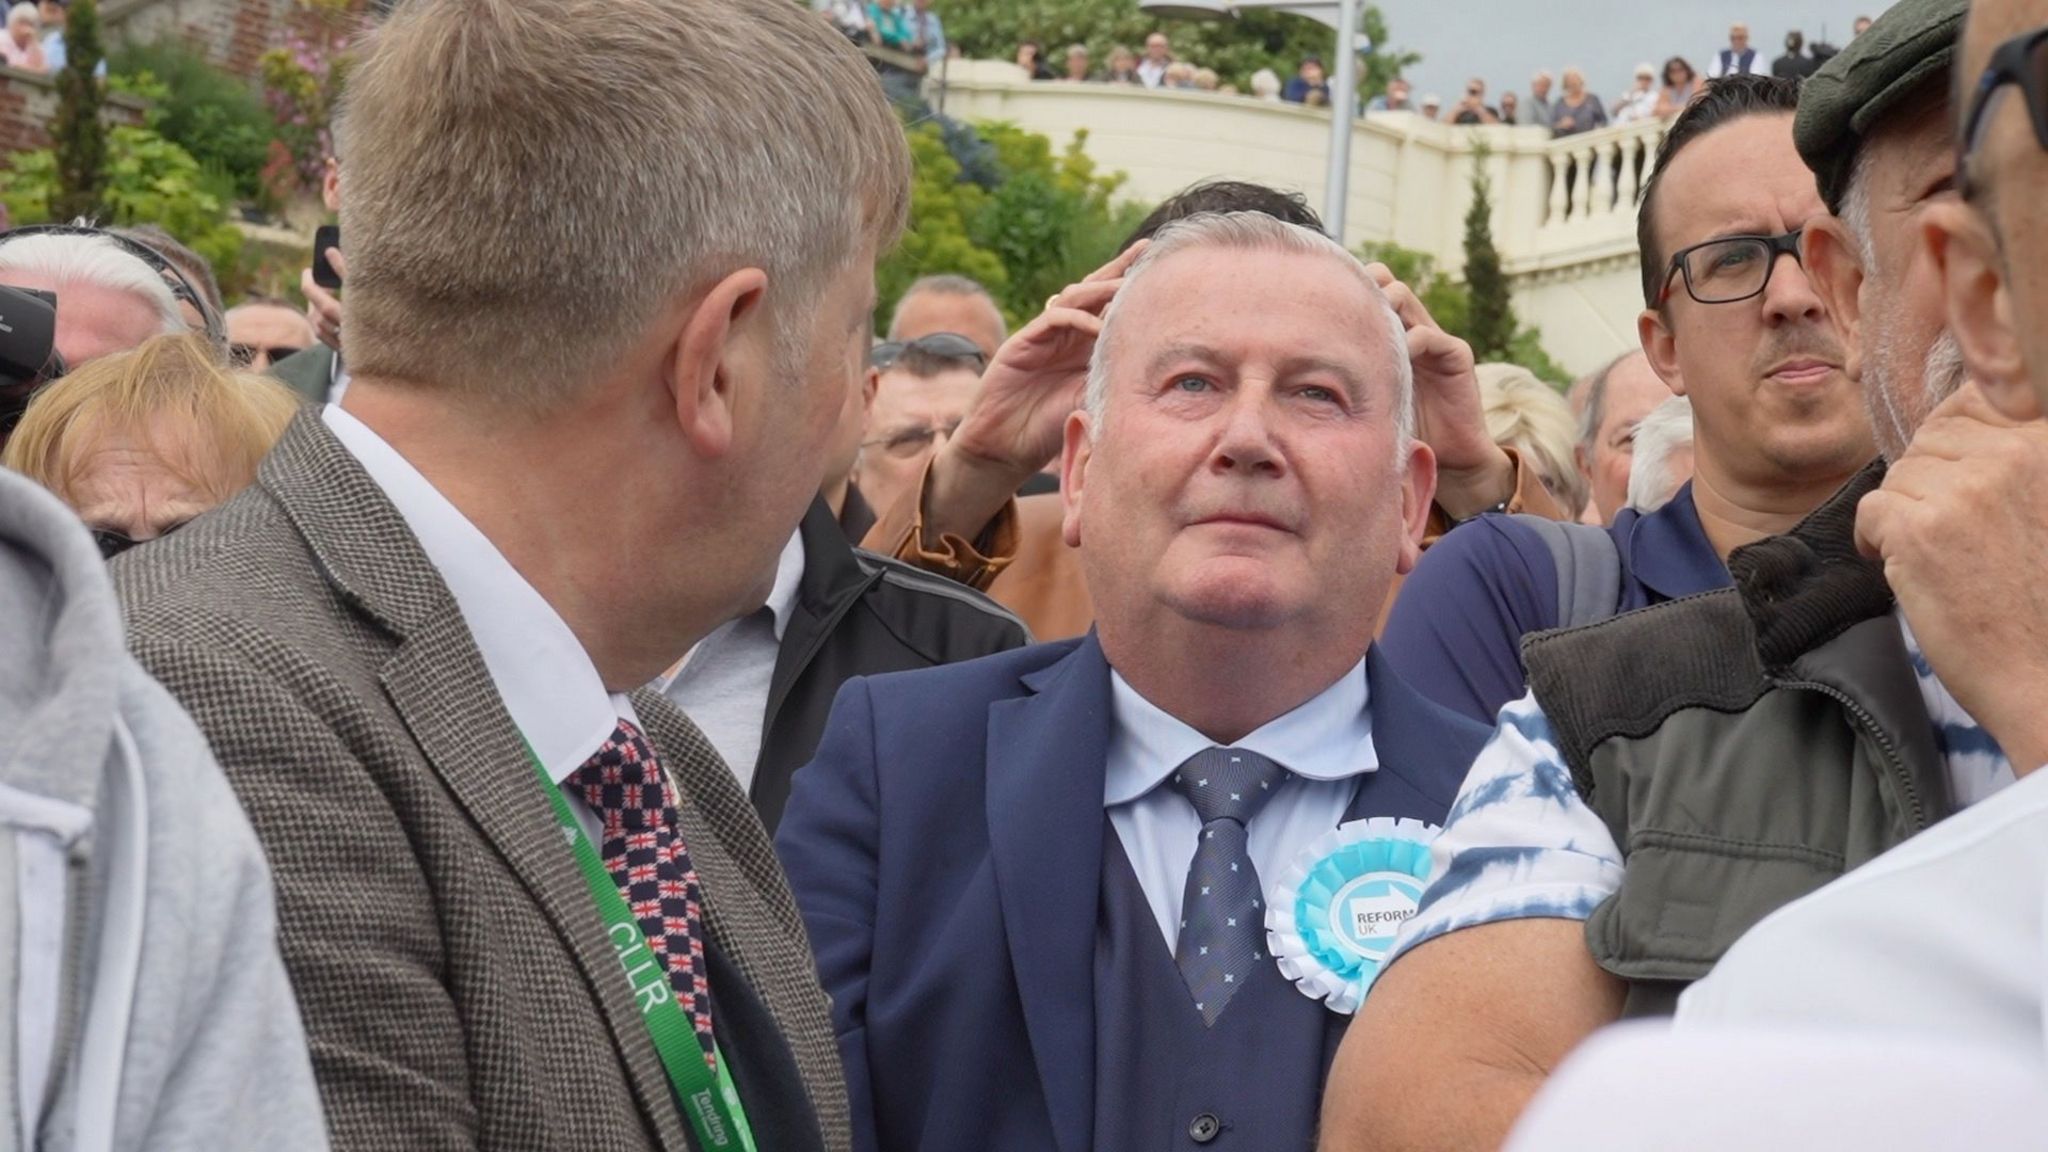 Tony Mack at Nigel Farage's rally in Clacton